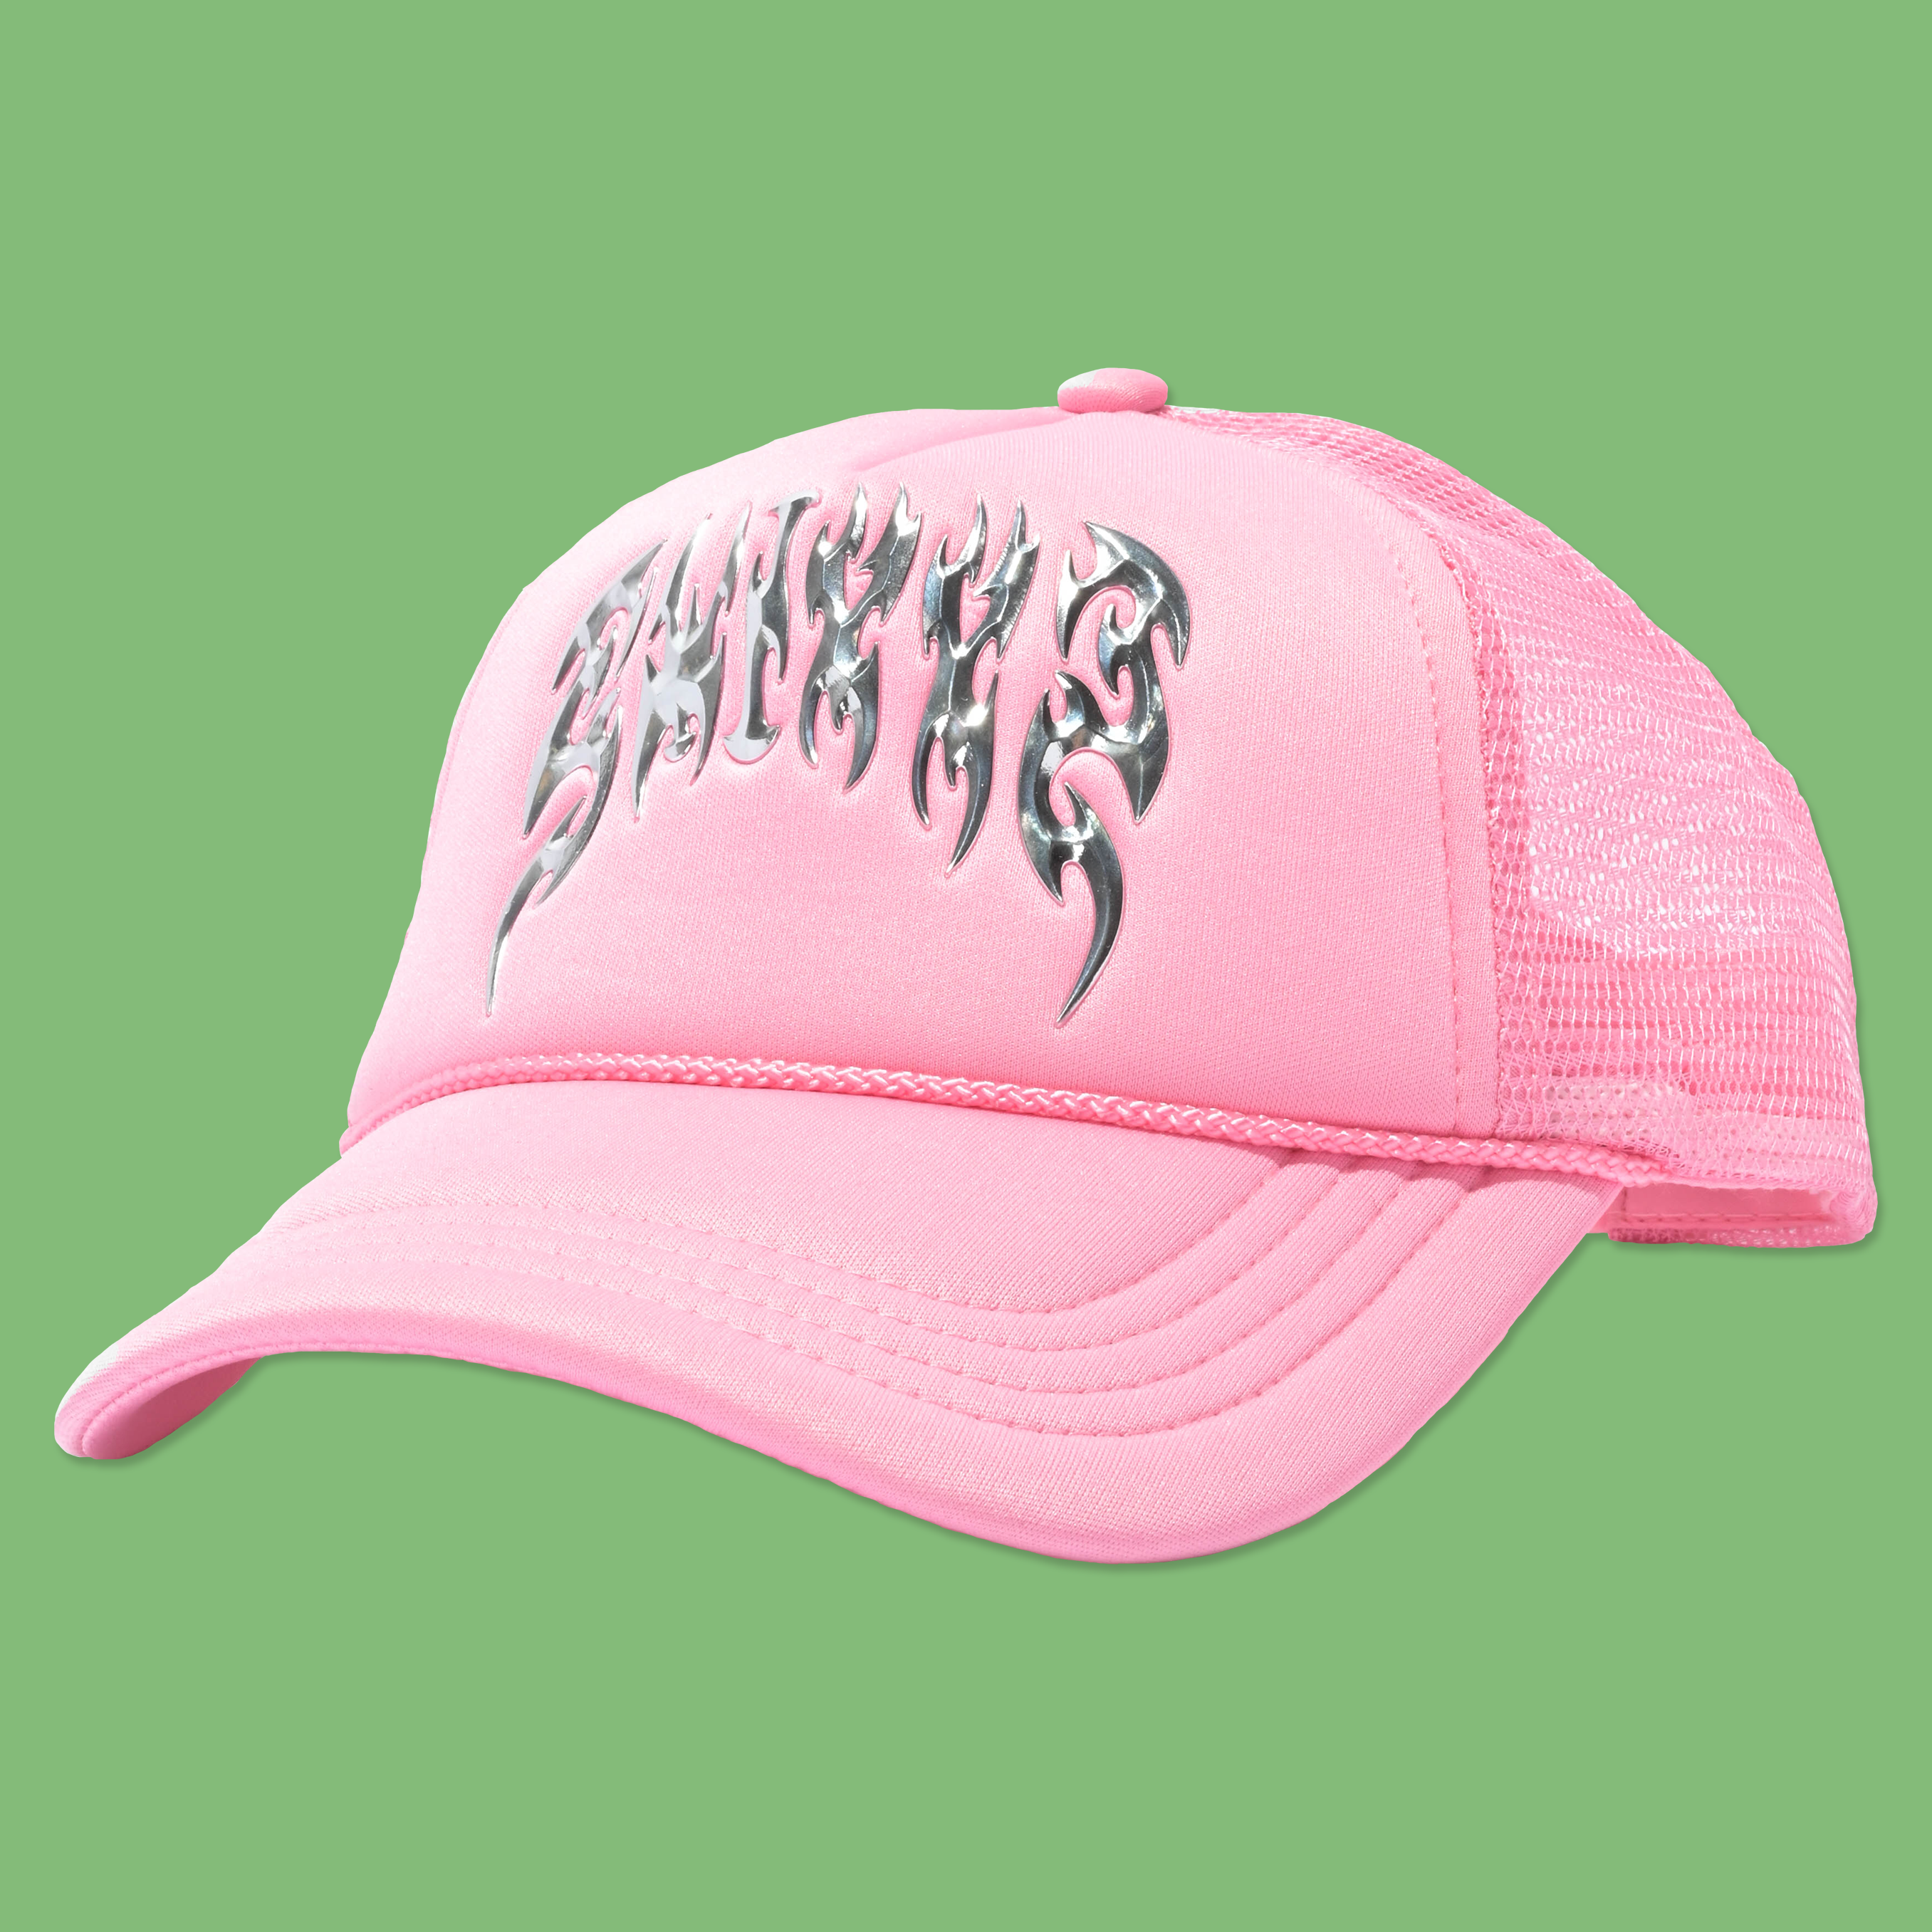 Pink Chrome Trucker Hat from SWIXXZ by Maggie Lindemann - Front